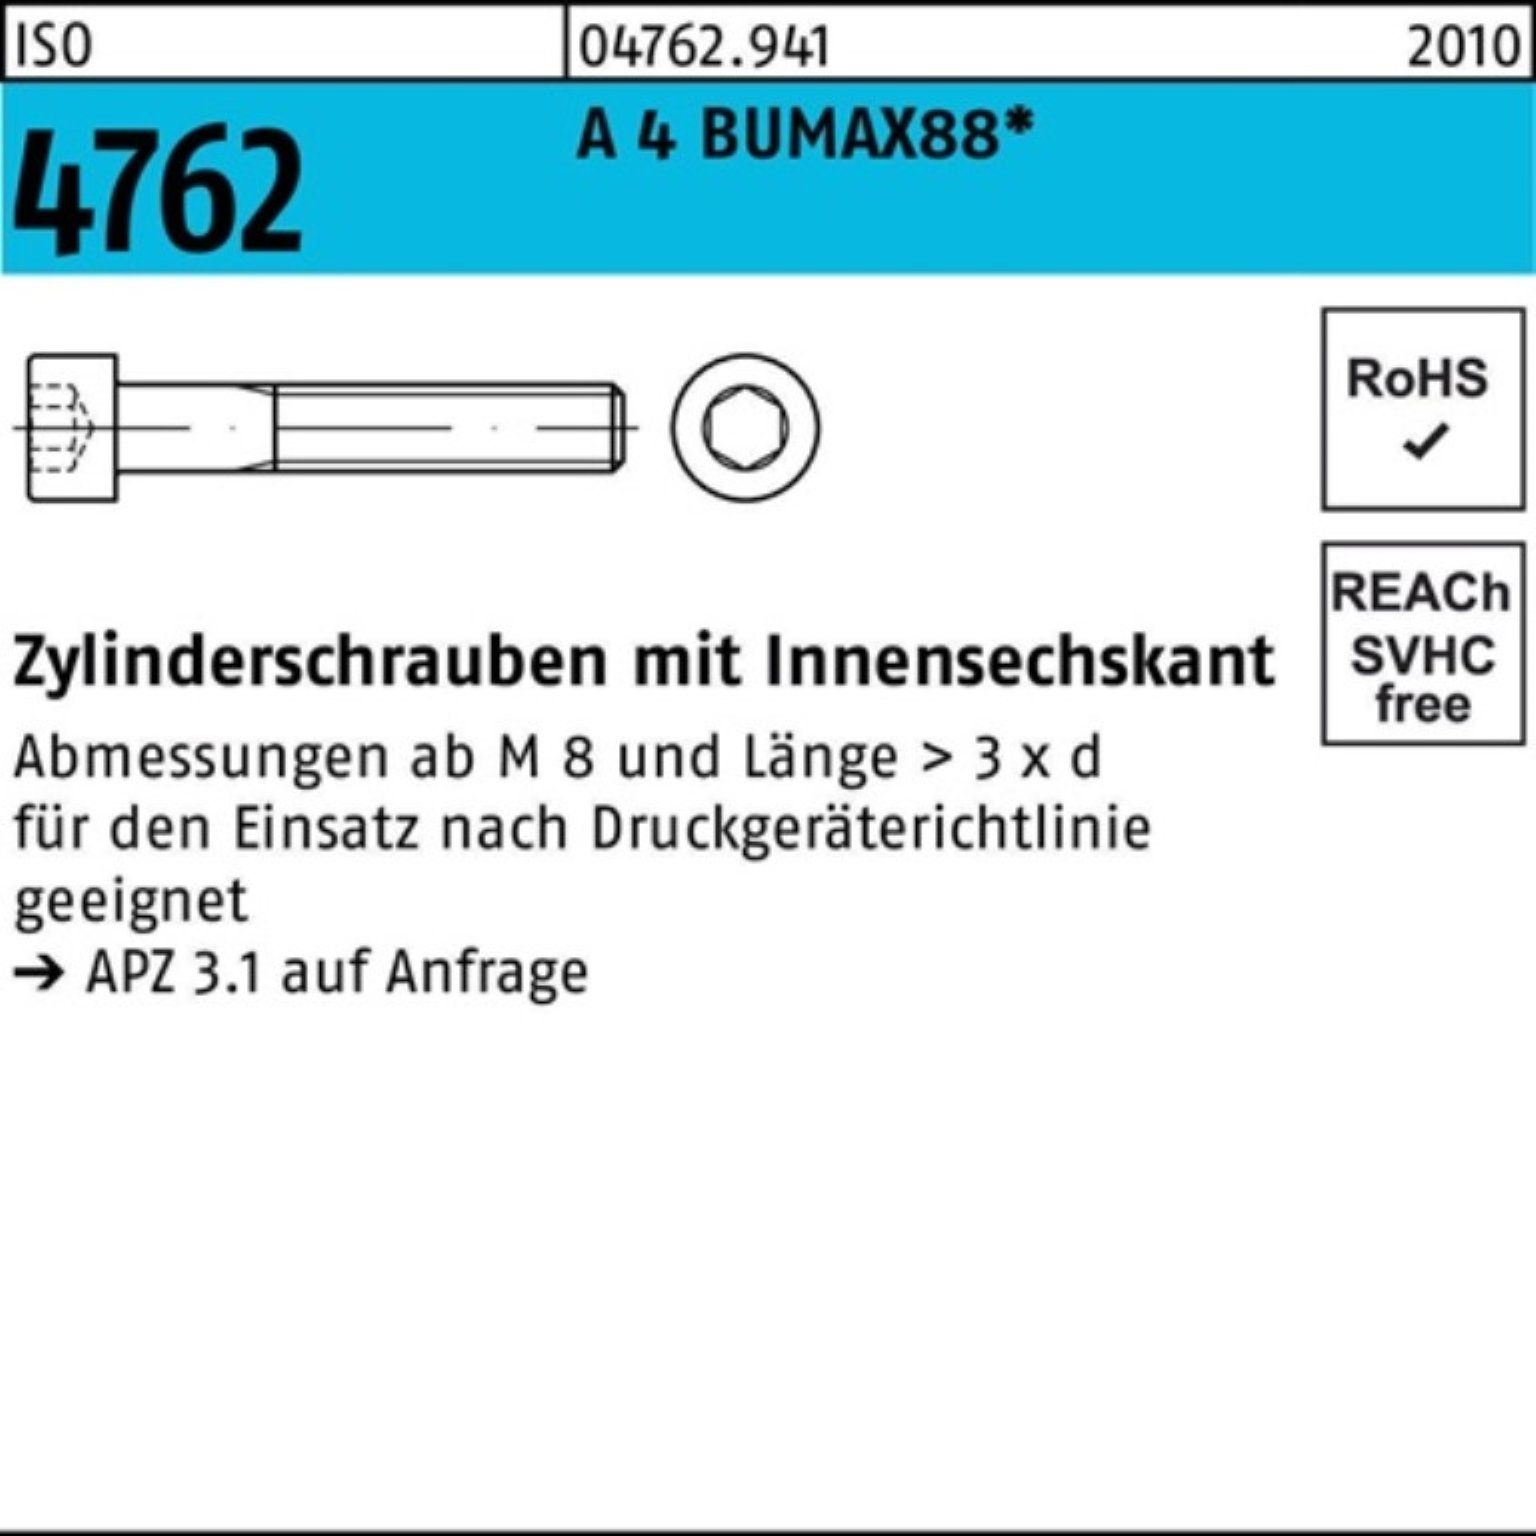 Bufab Zylinderschraube 500er Pack Zylinderschraube ISO 4762 Innen-6kt M3x 12 A 4 BUMAX88 500